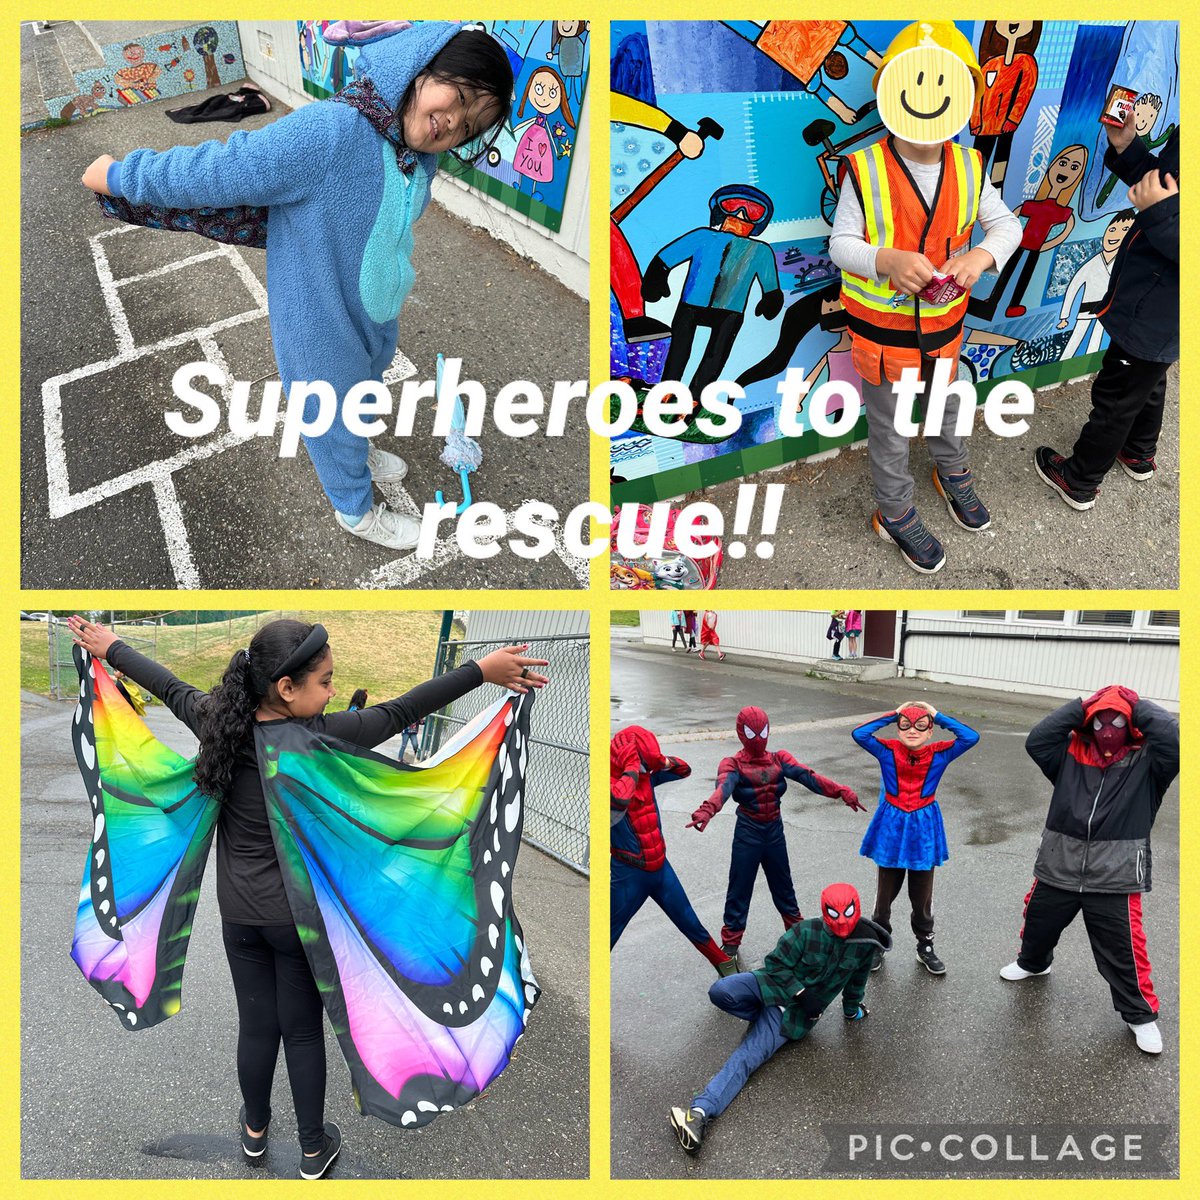 Superhero Day! Lots of fun today!#celebratetheheroinyou #spiritday @burnabyschools @BurnabyBill @KathrynYamamoto